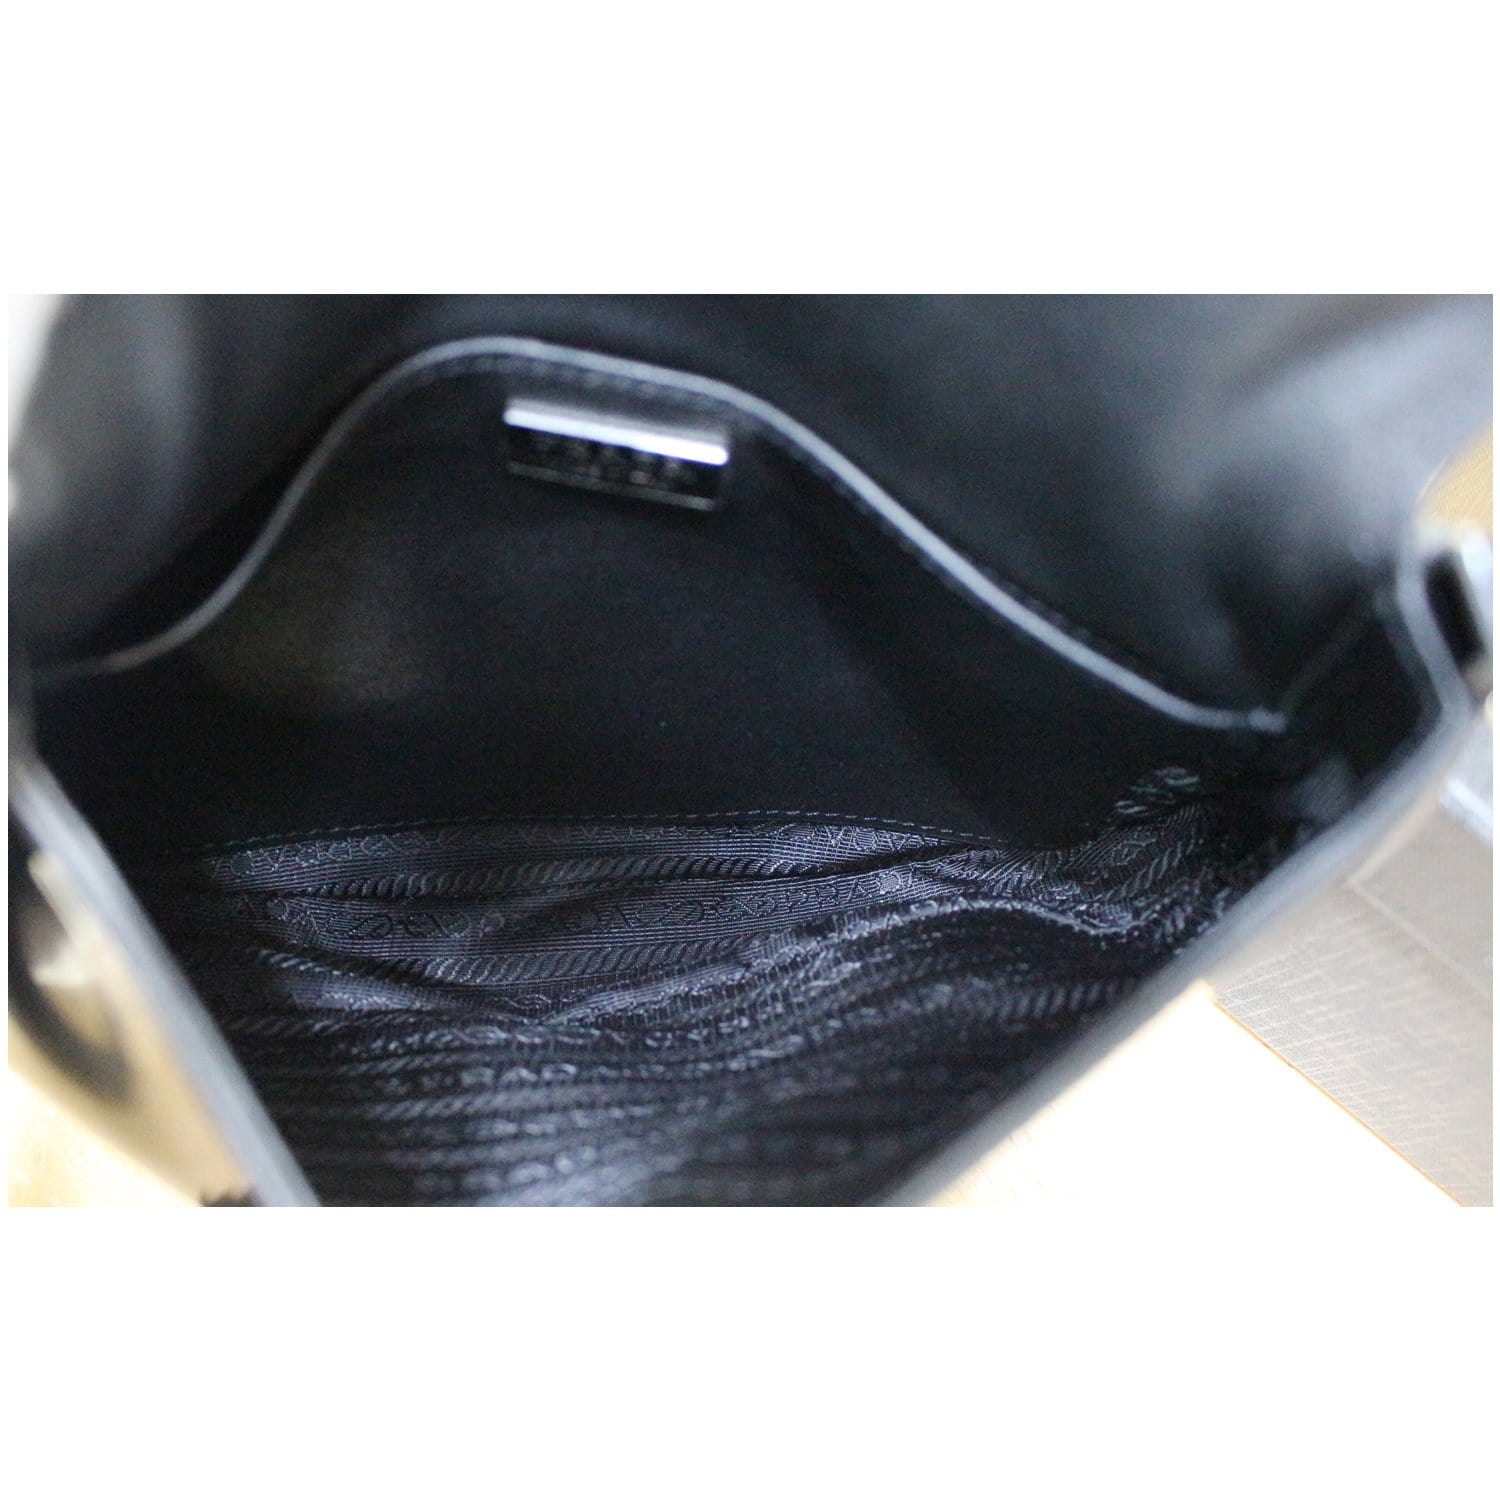 Cleo vegan leather handbag Prada Black in Vegan leather - 21140411